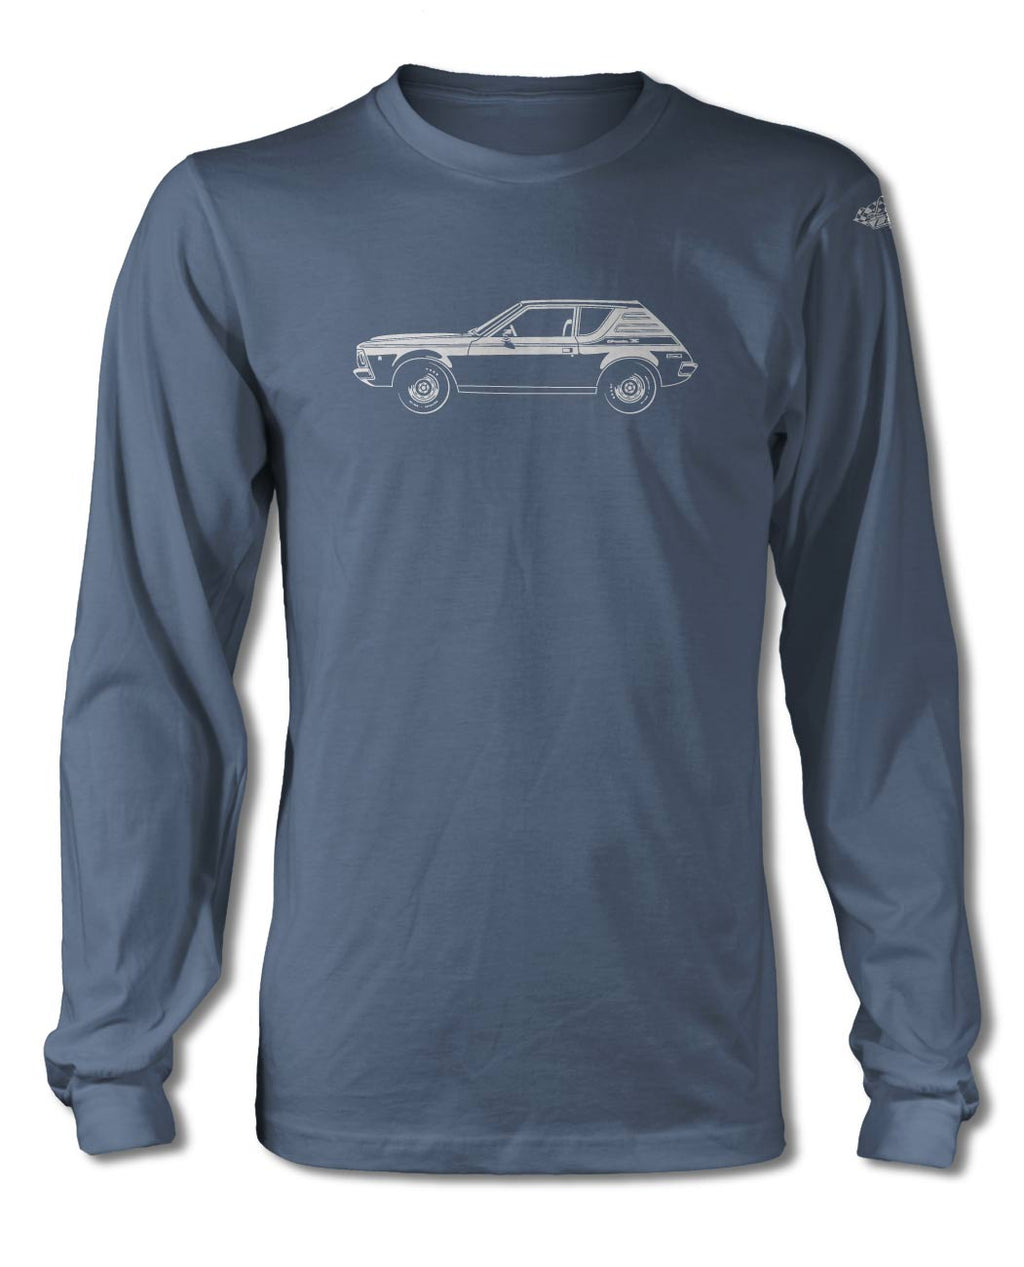 1971 AMC Gremlin X T-Shirt - Long Sleeves - Side View